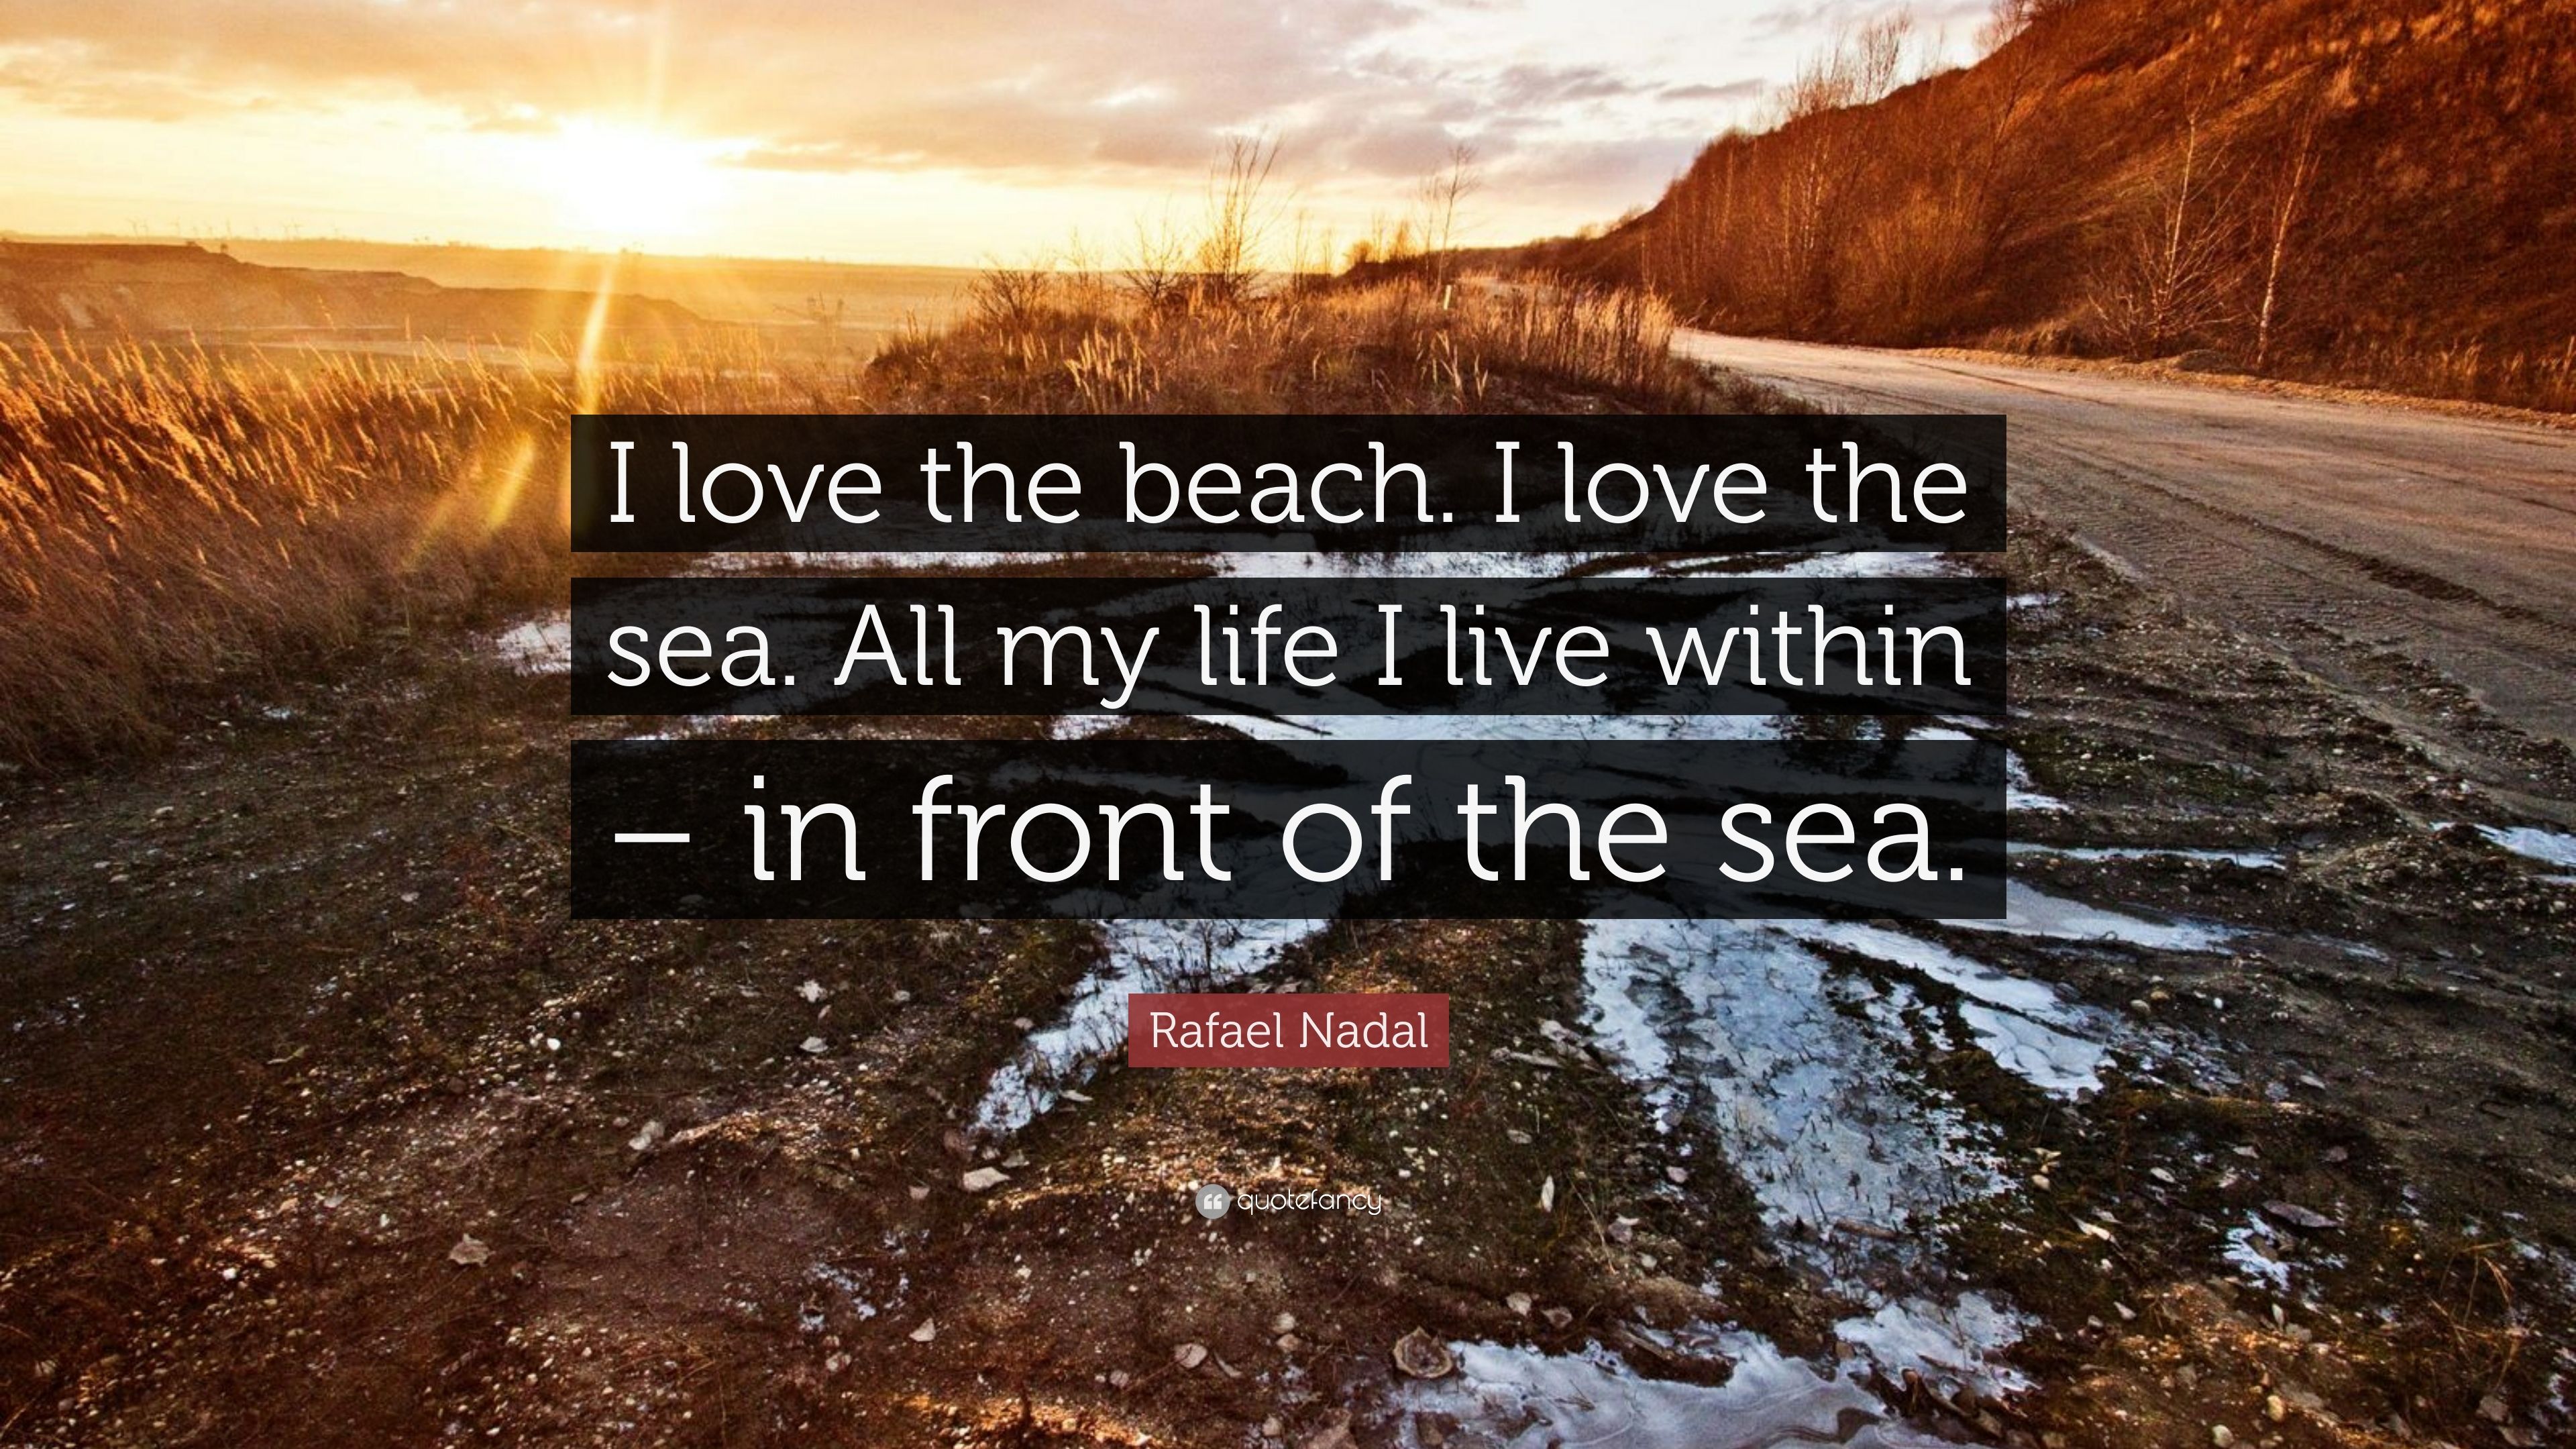 Rafael Nadal Quote: “I love the beach. I love the sea. All my life